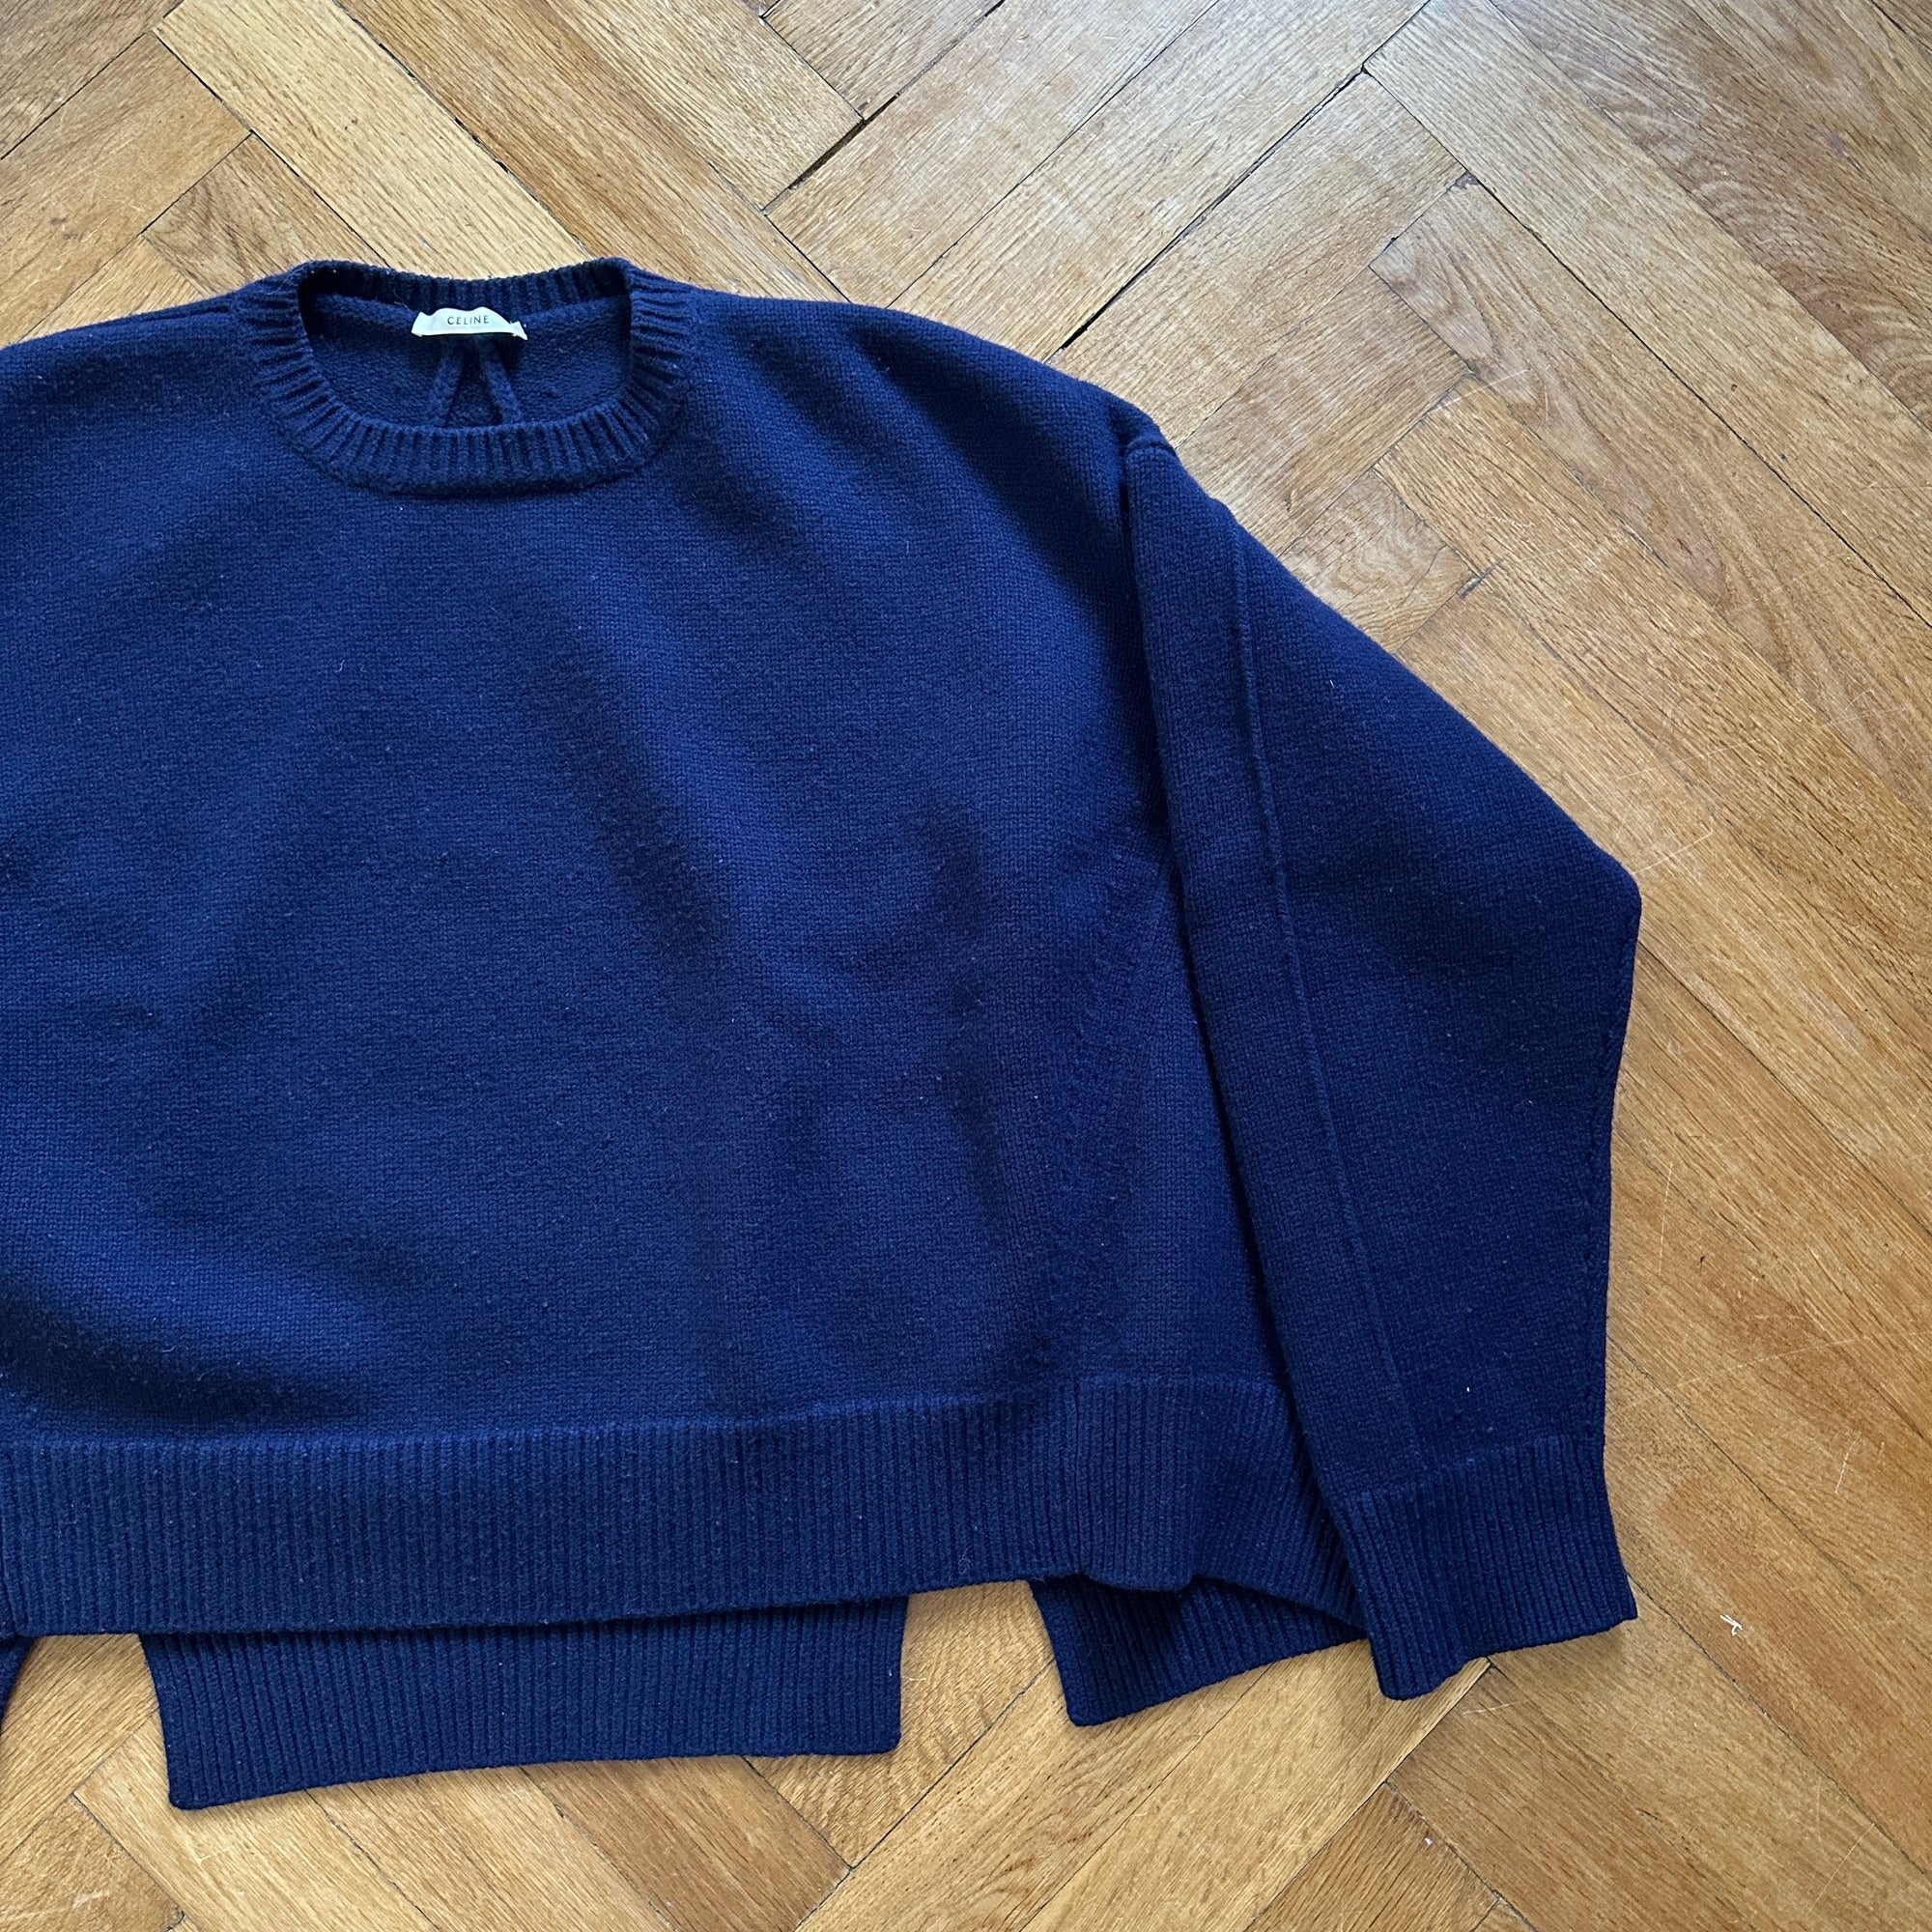 Céline by Phoebe Philo FW13 Blue Knit Sweater